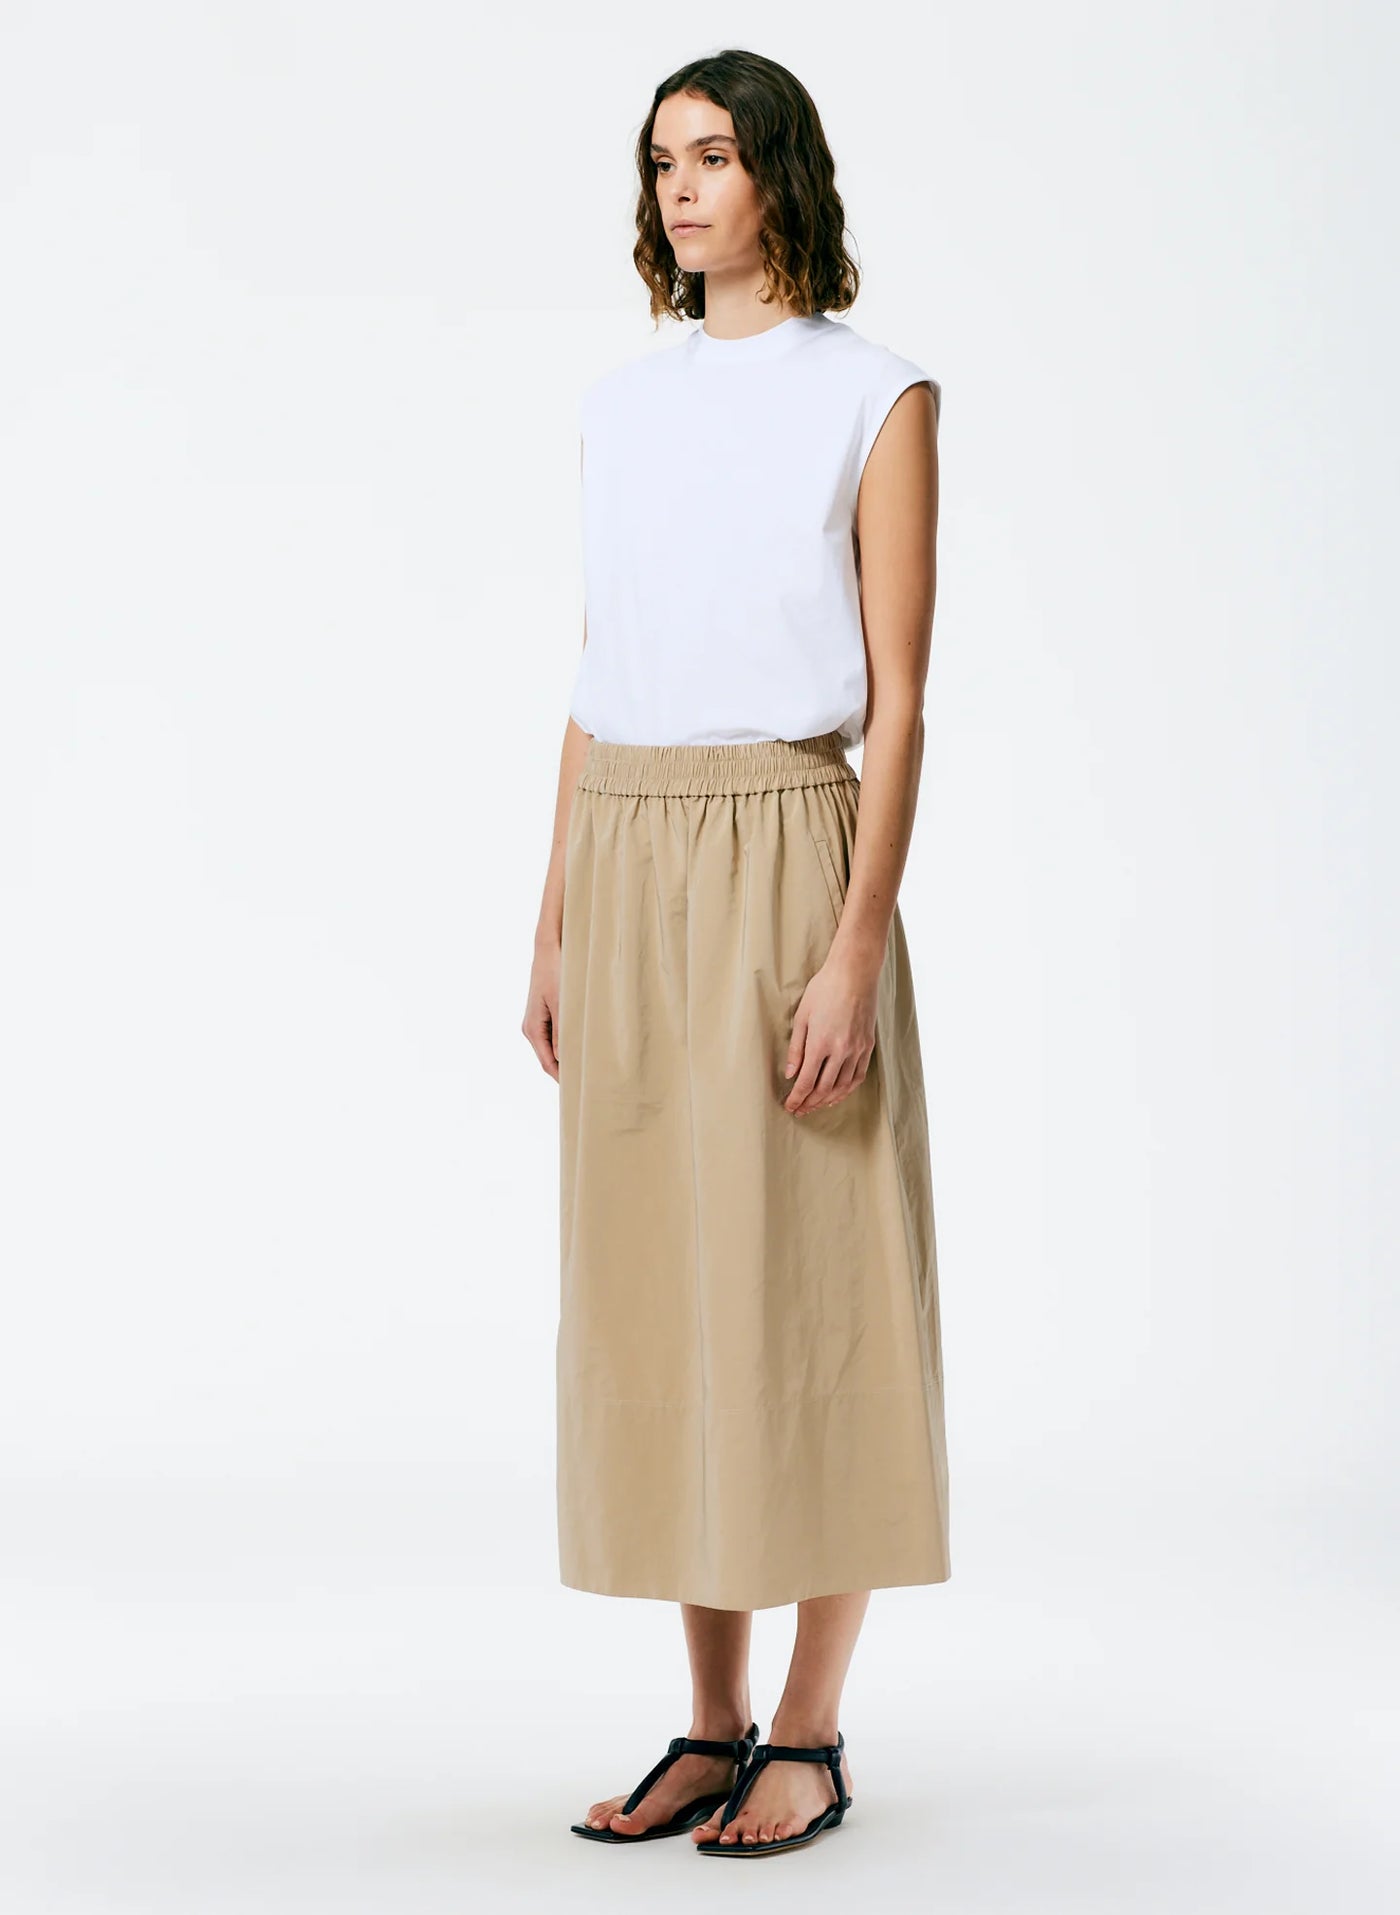 Nylon Pull On Full Skirt - More Colors Available